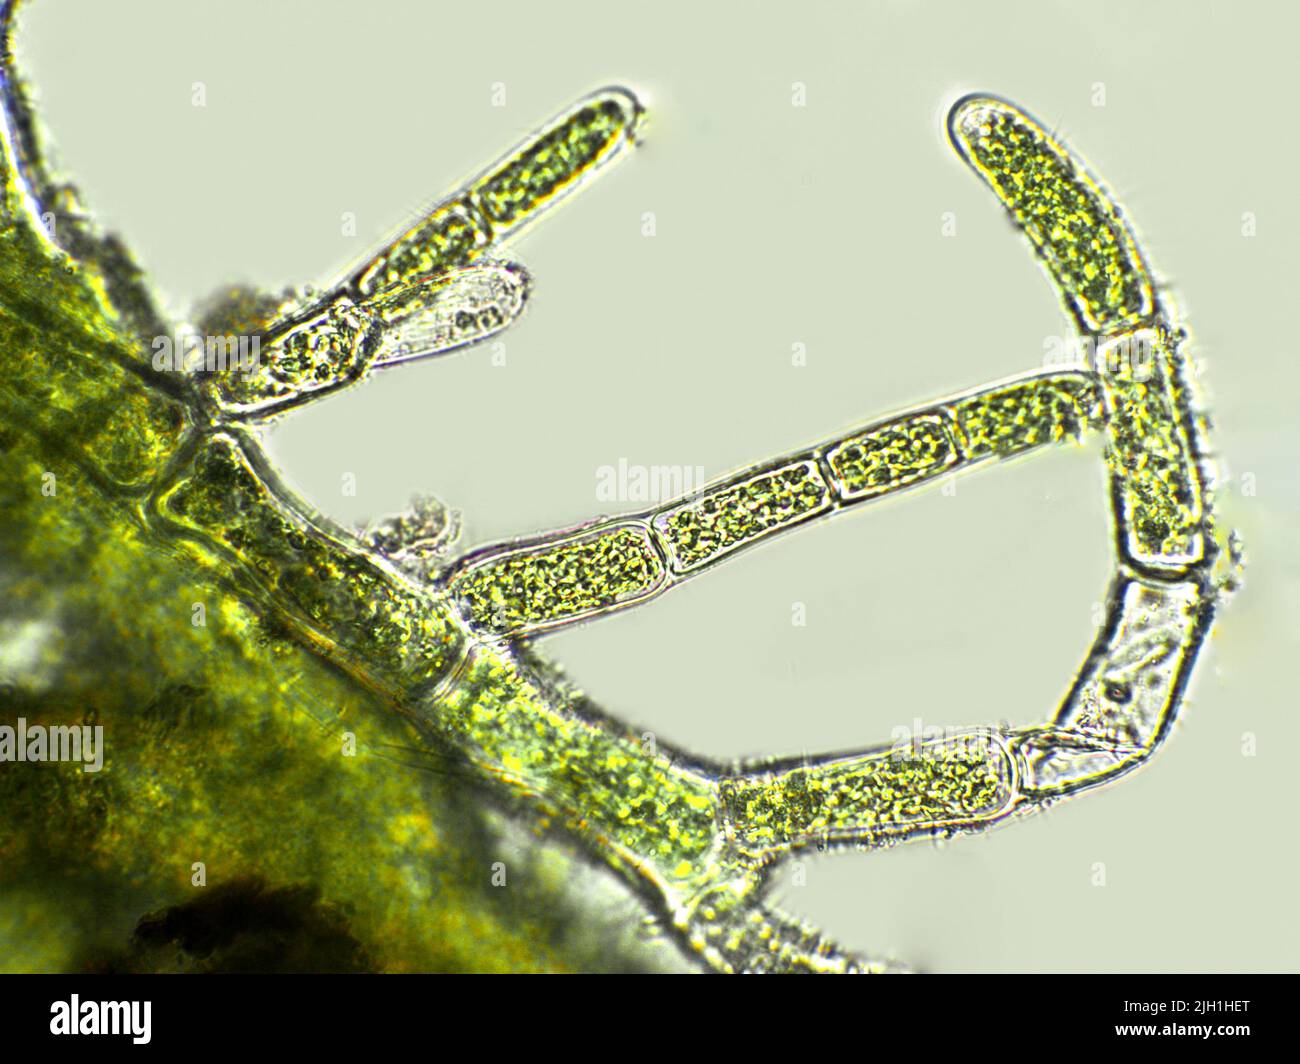 Cladophora sp. algae under microscopic view, Filamentous green algae Stock Photo